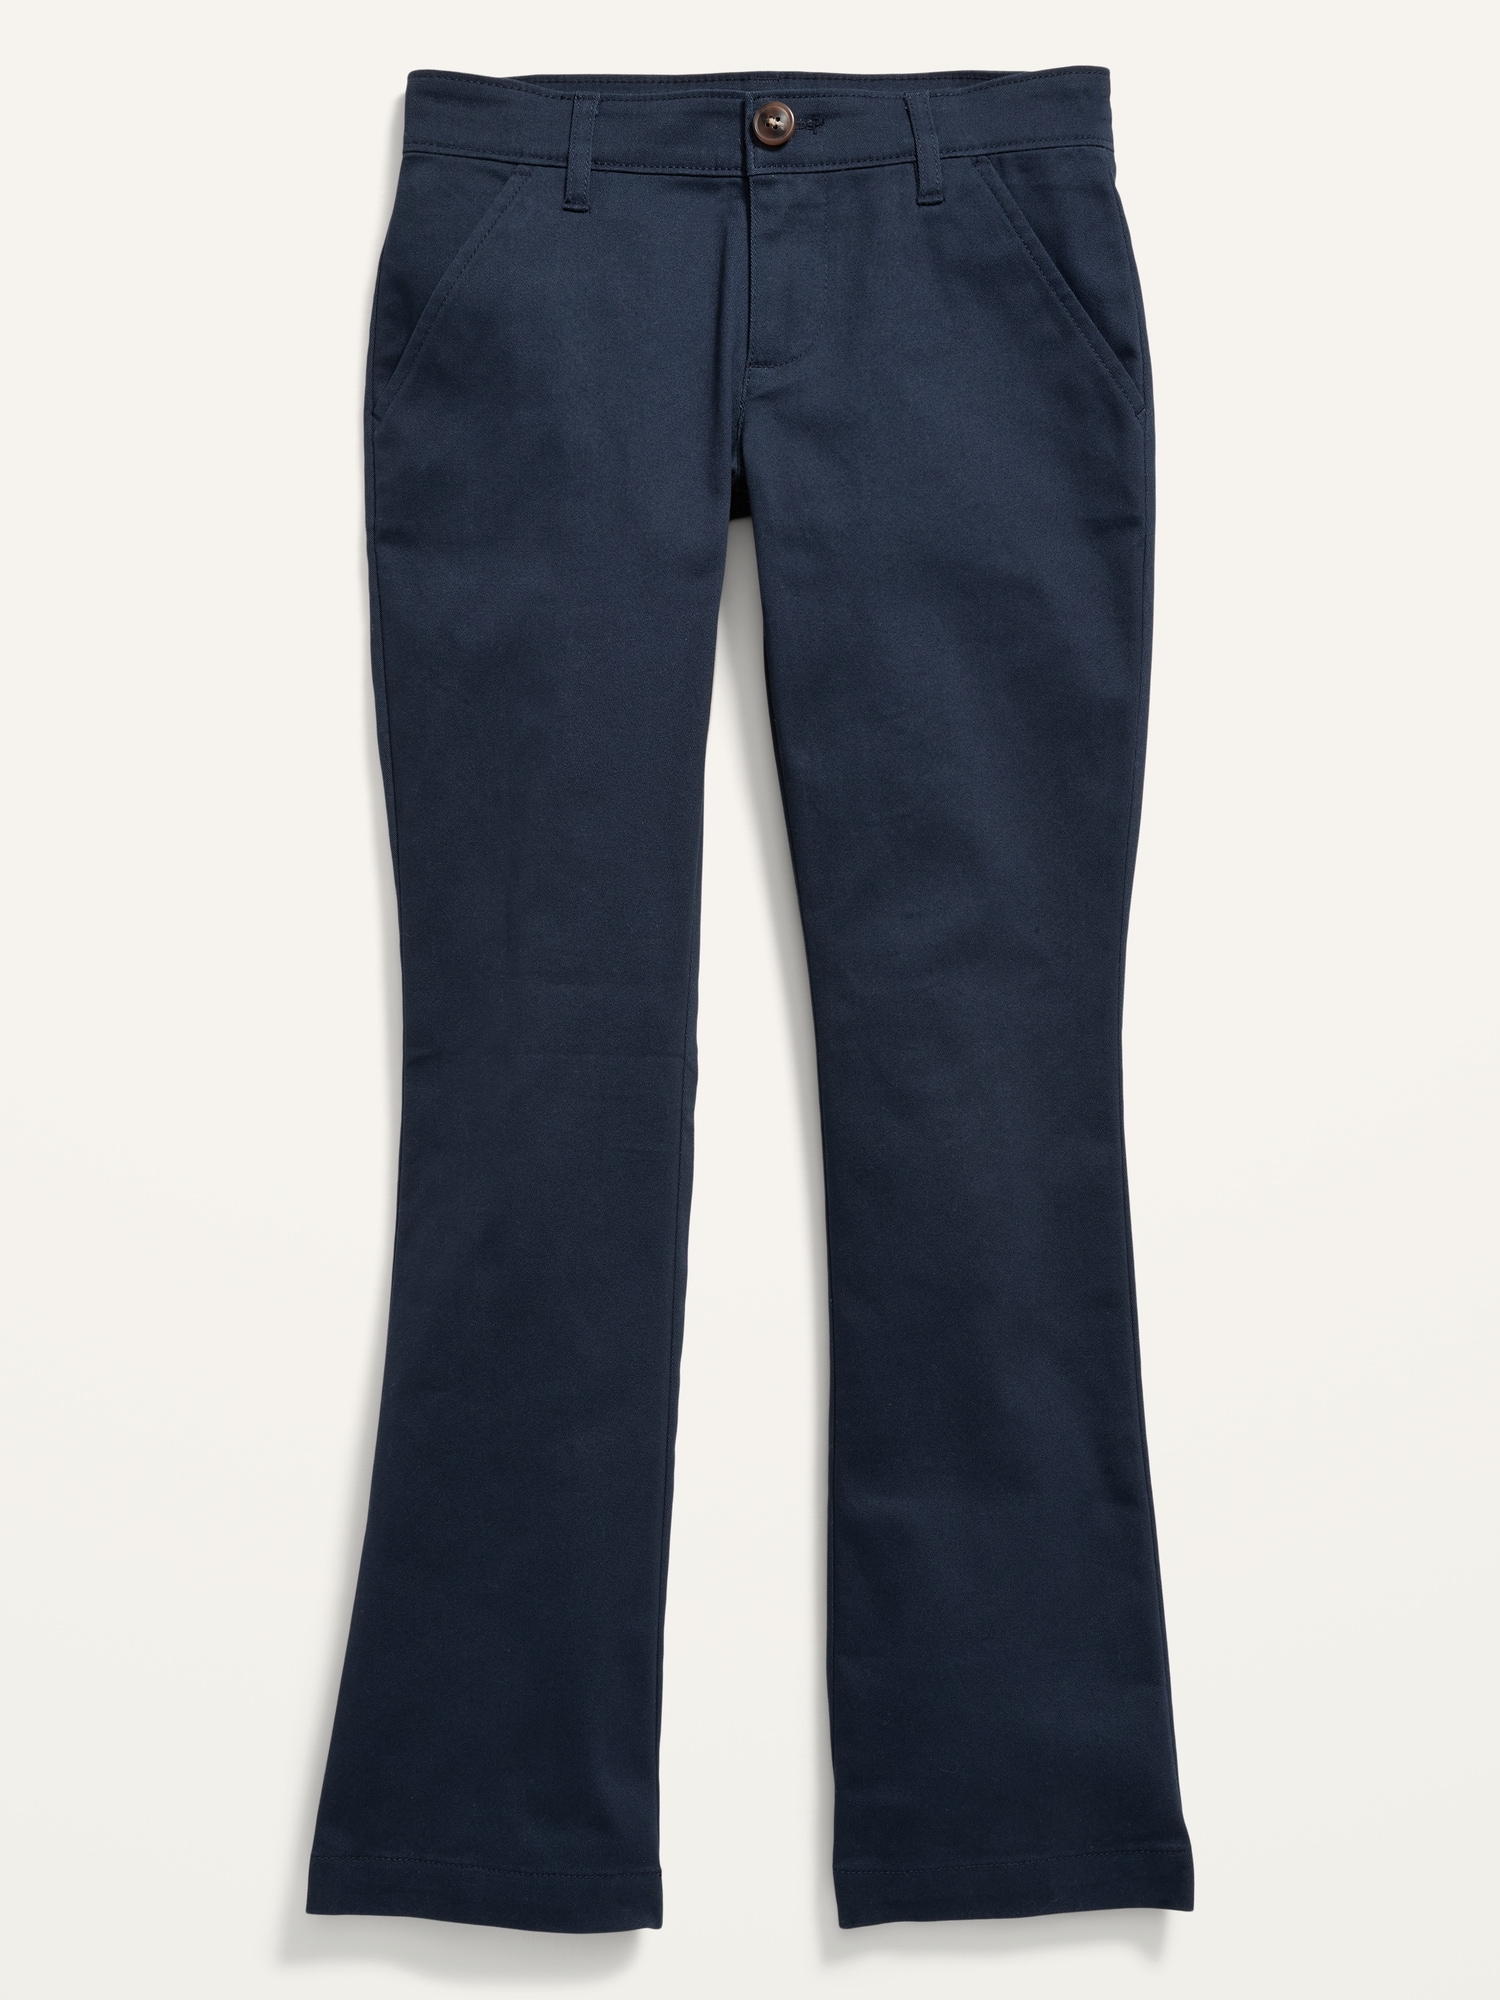 Wholesale Girls' Flat Front Uniform Pants - Navy, Size 18 - DollarDays